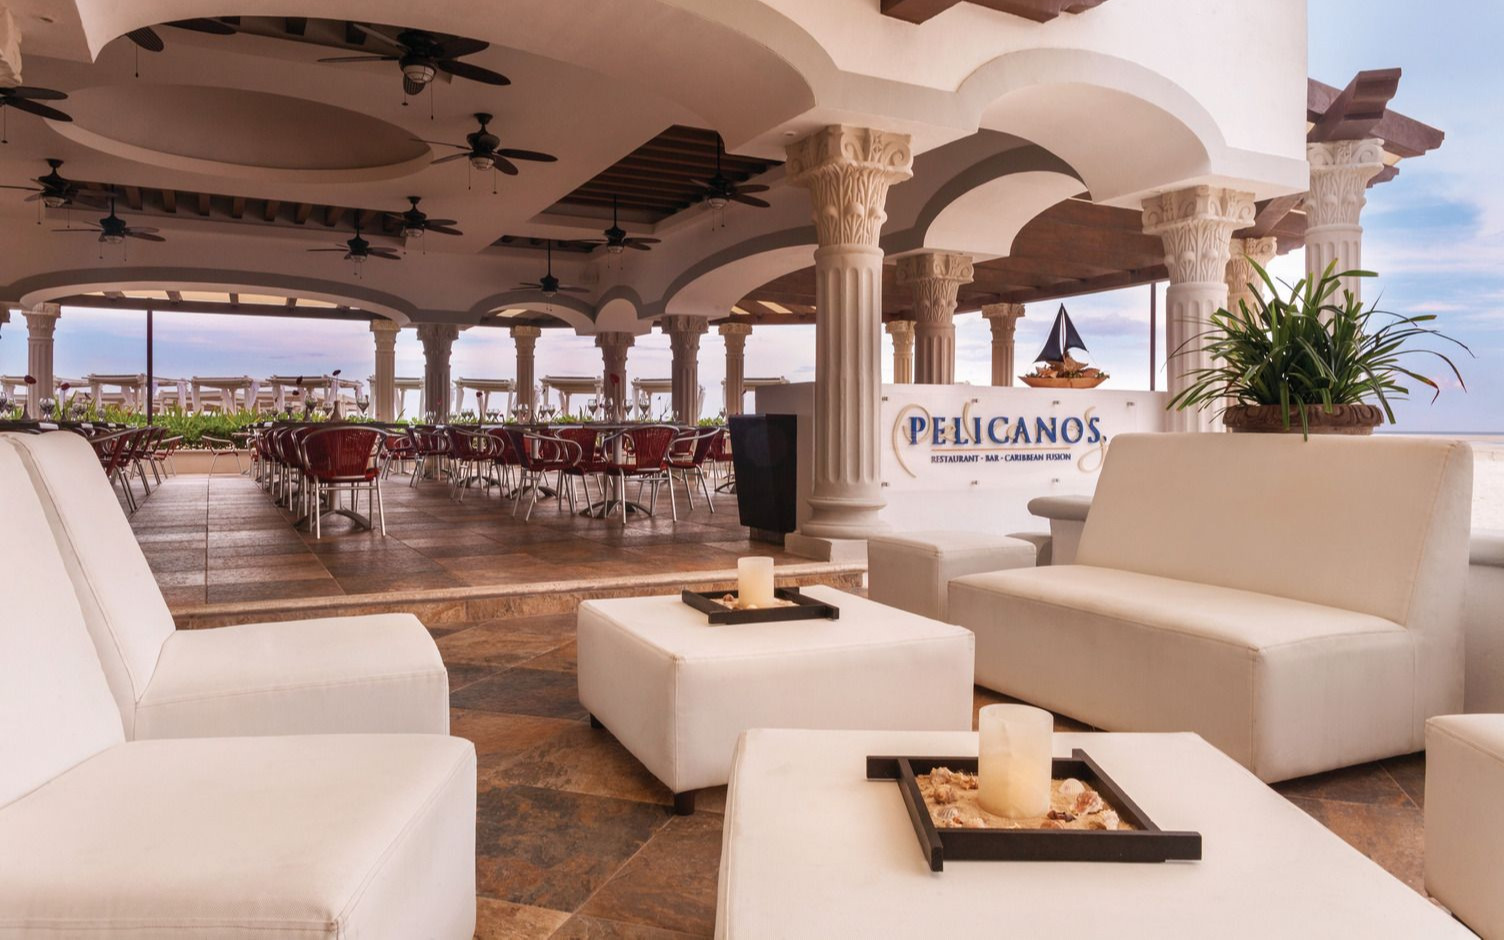 Hilton Playa del Carmen restaurant Pelicanos